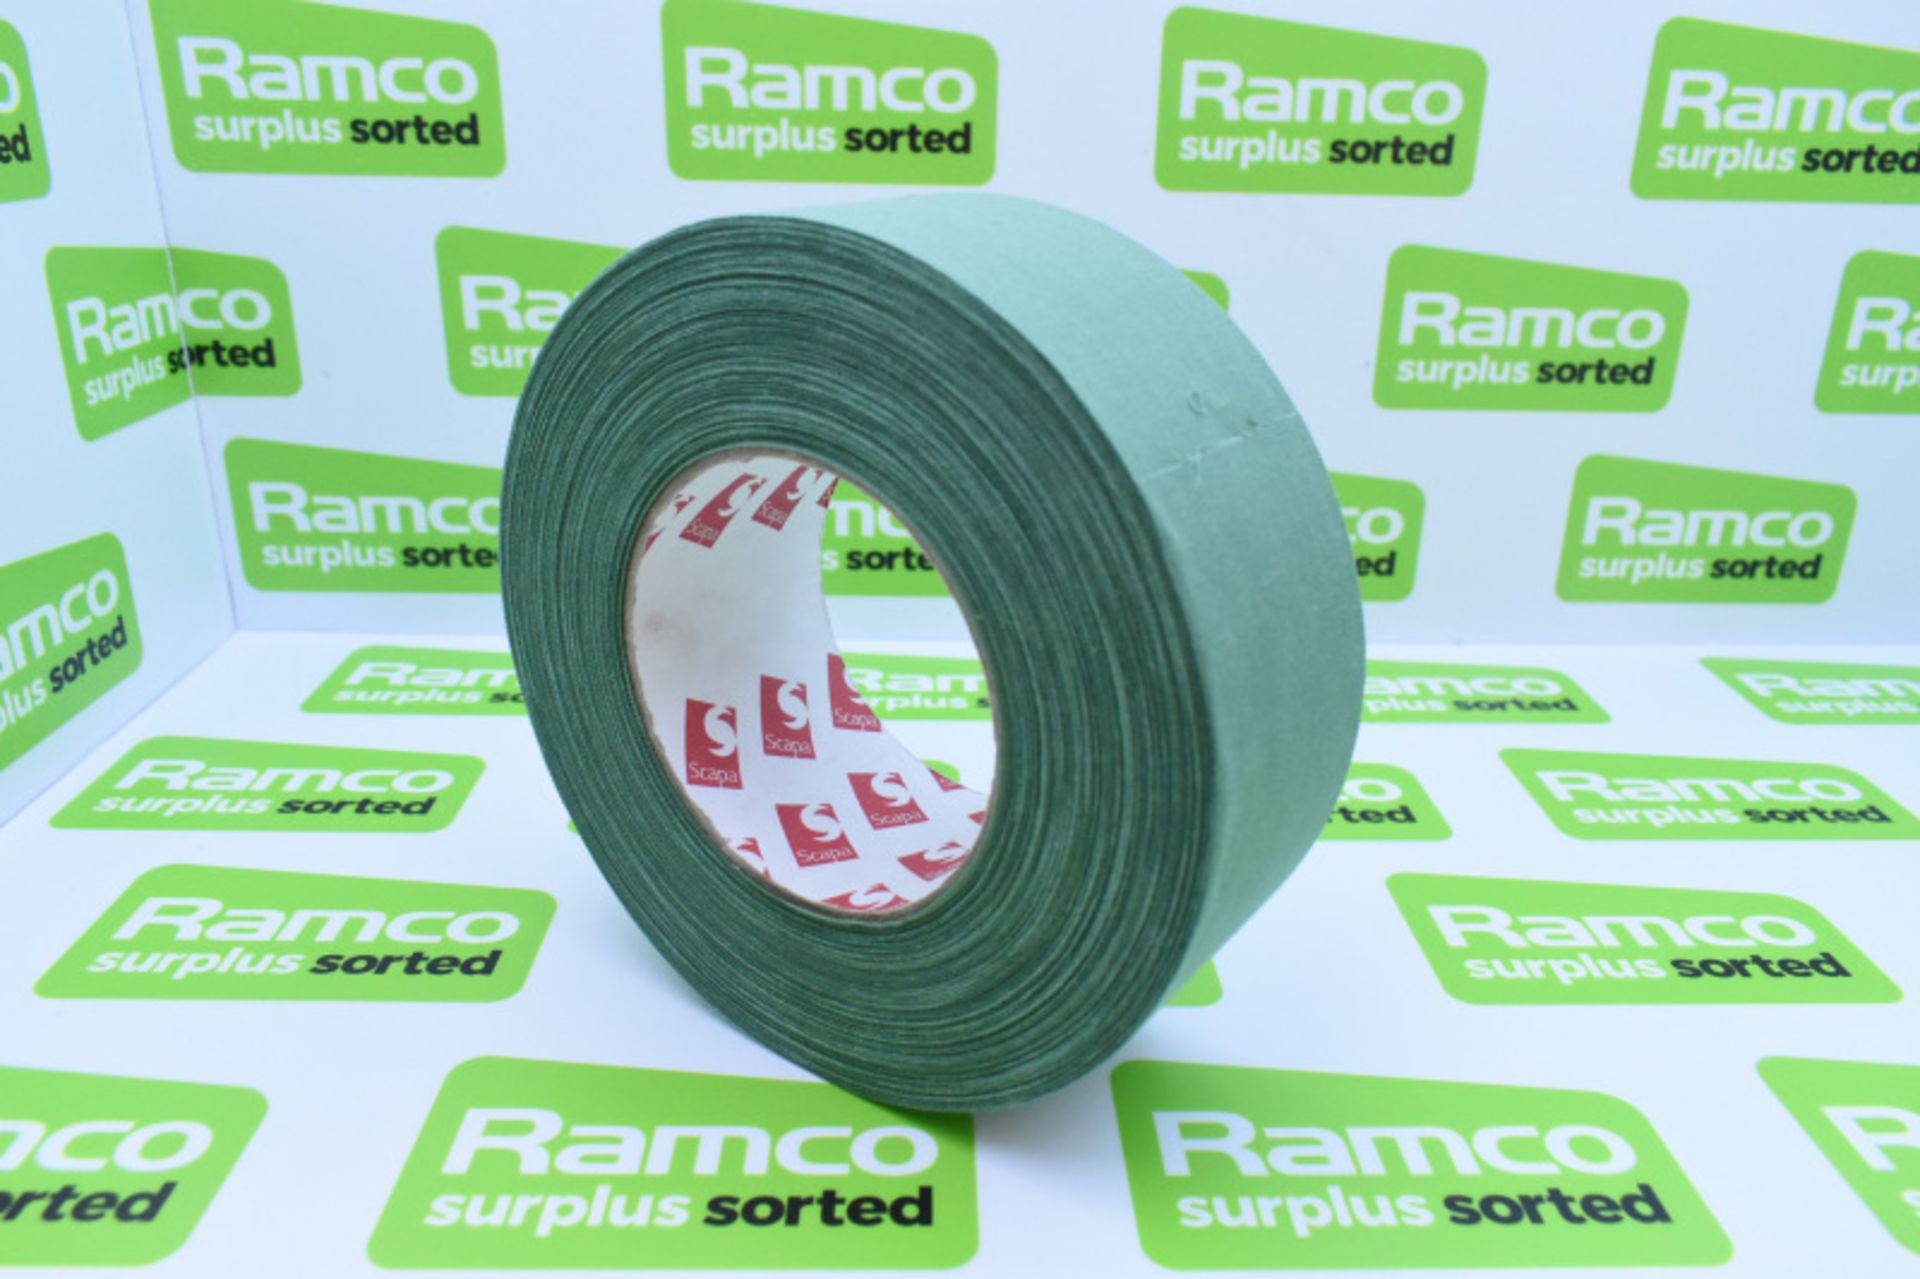 Scapa 3302 Pro Tape - Olive Green - 50mm x 50M rolls - 16 rolls per box - 1 box - manufactured 05/11 - Image 4 of 4